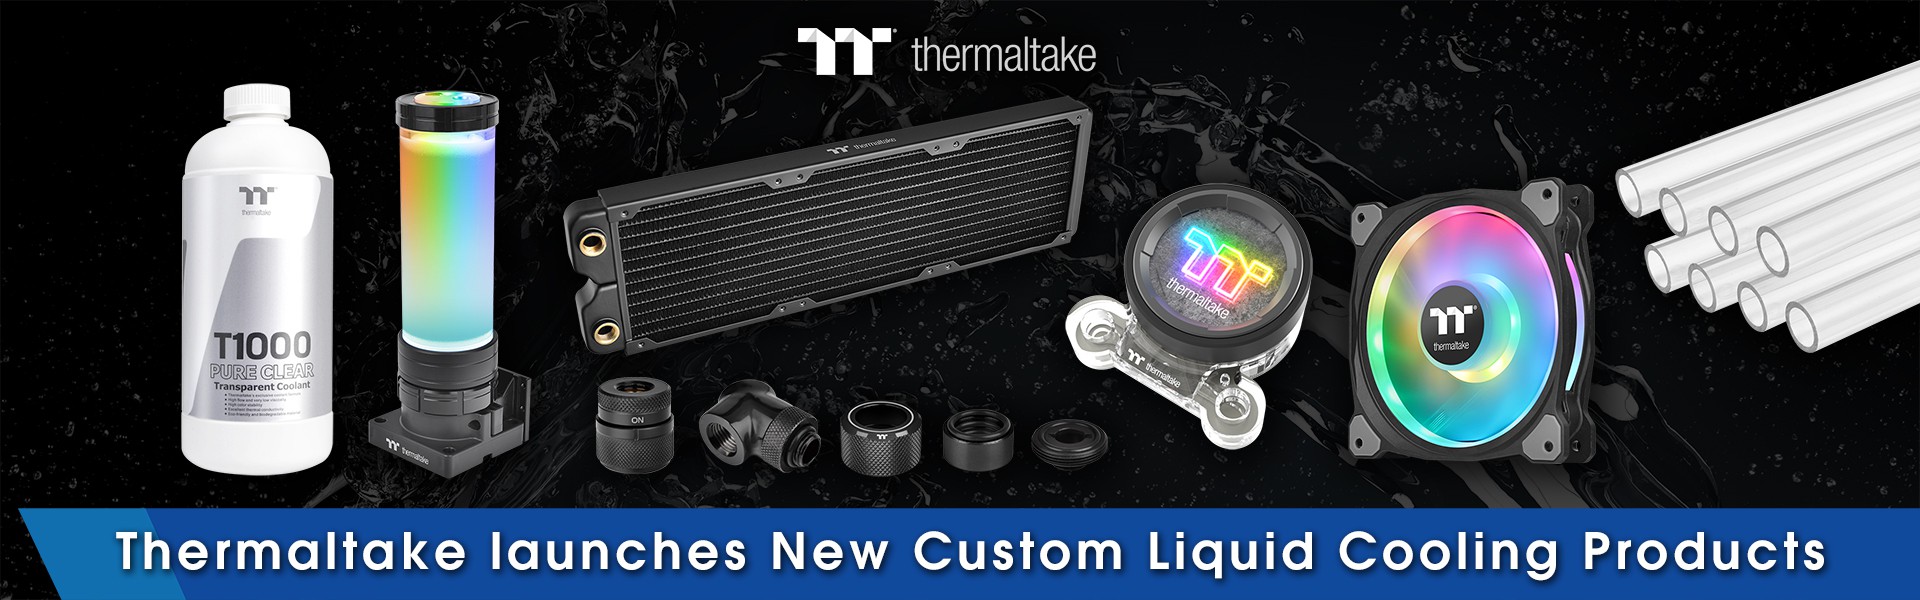 Thermaltake C240 DDC Hard Tube Liquid Cooling Kit Review